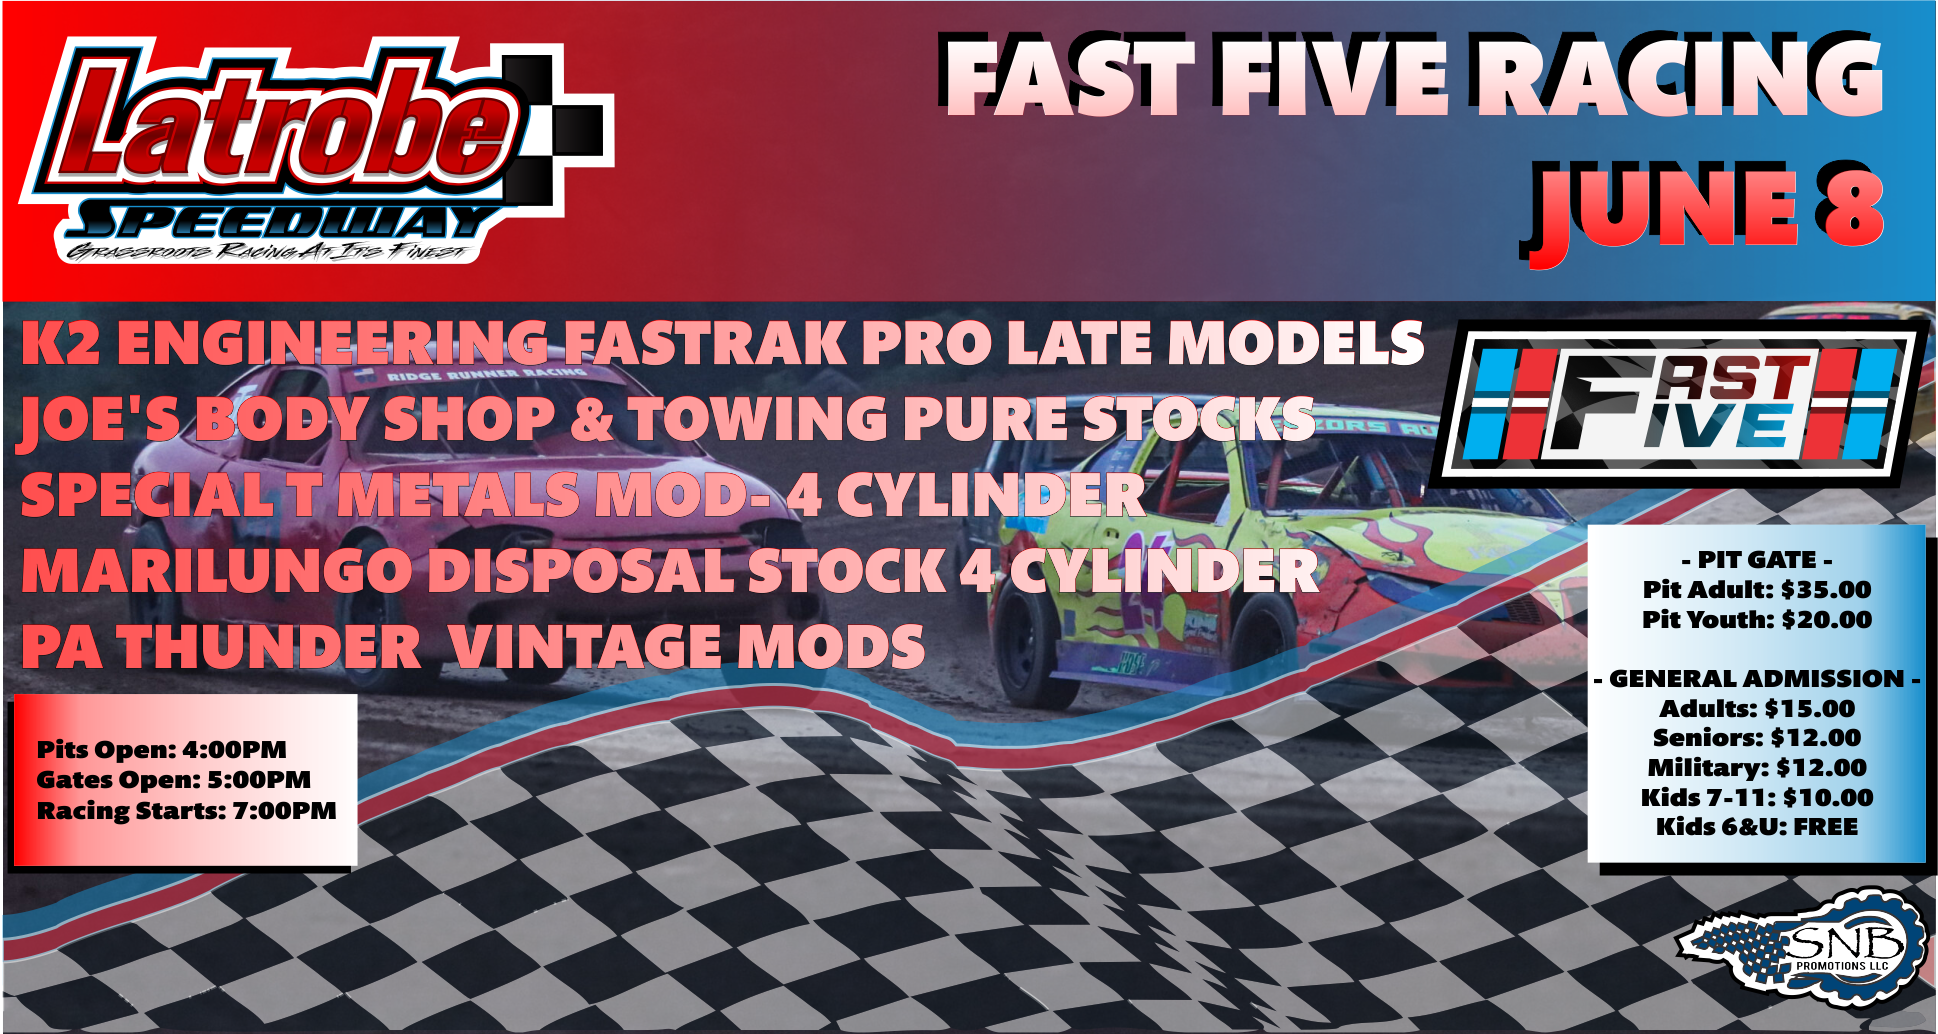 FAST FIVE RACING